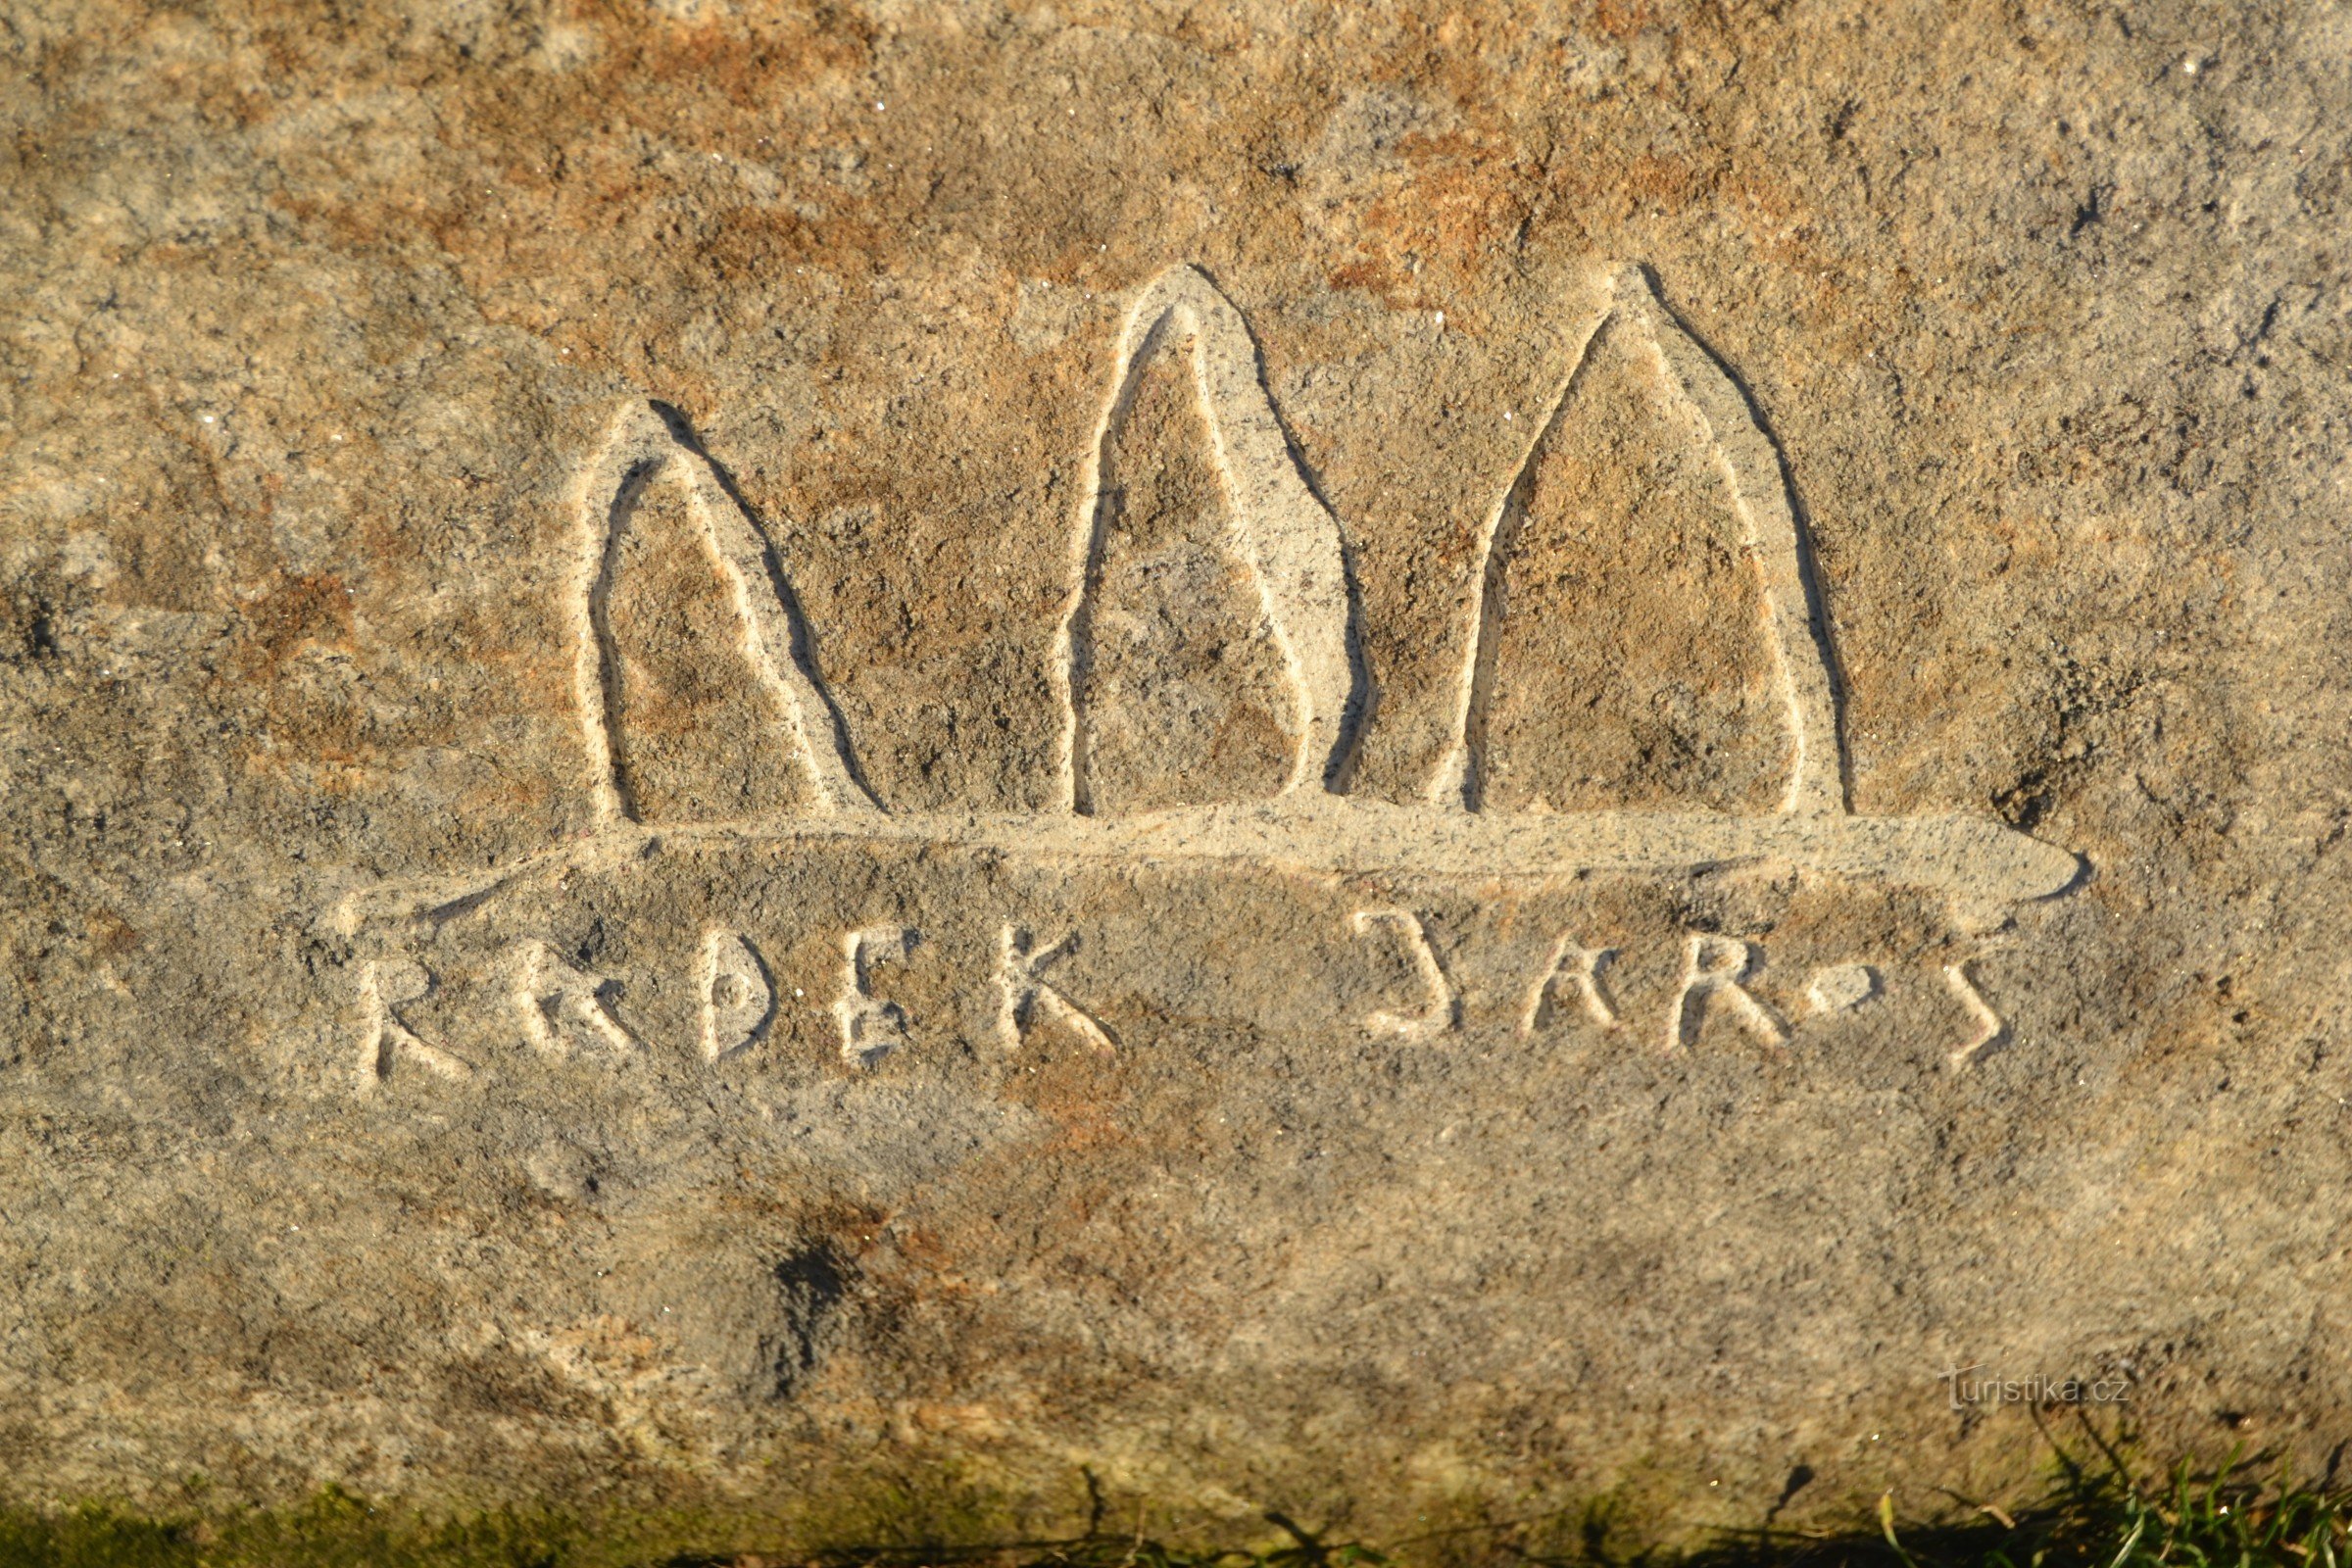 Jaroš's stone